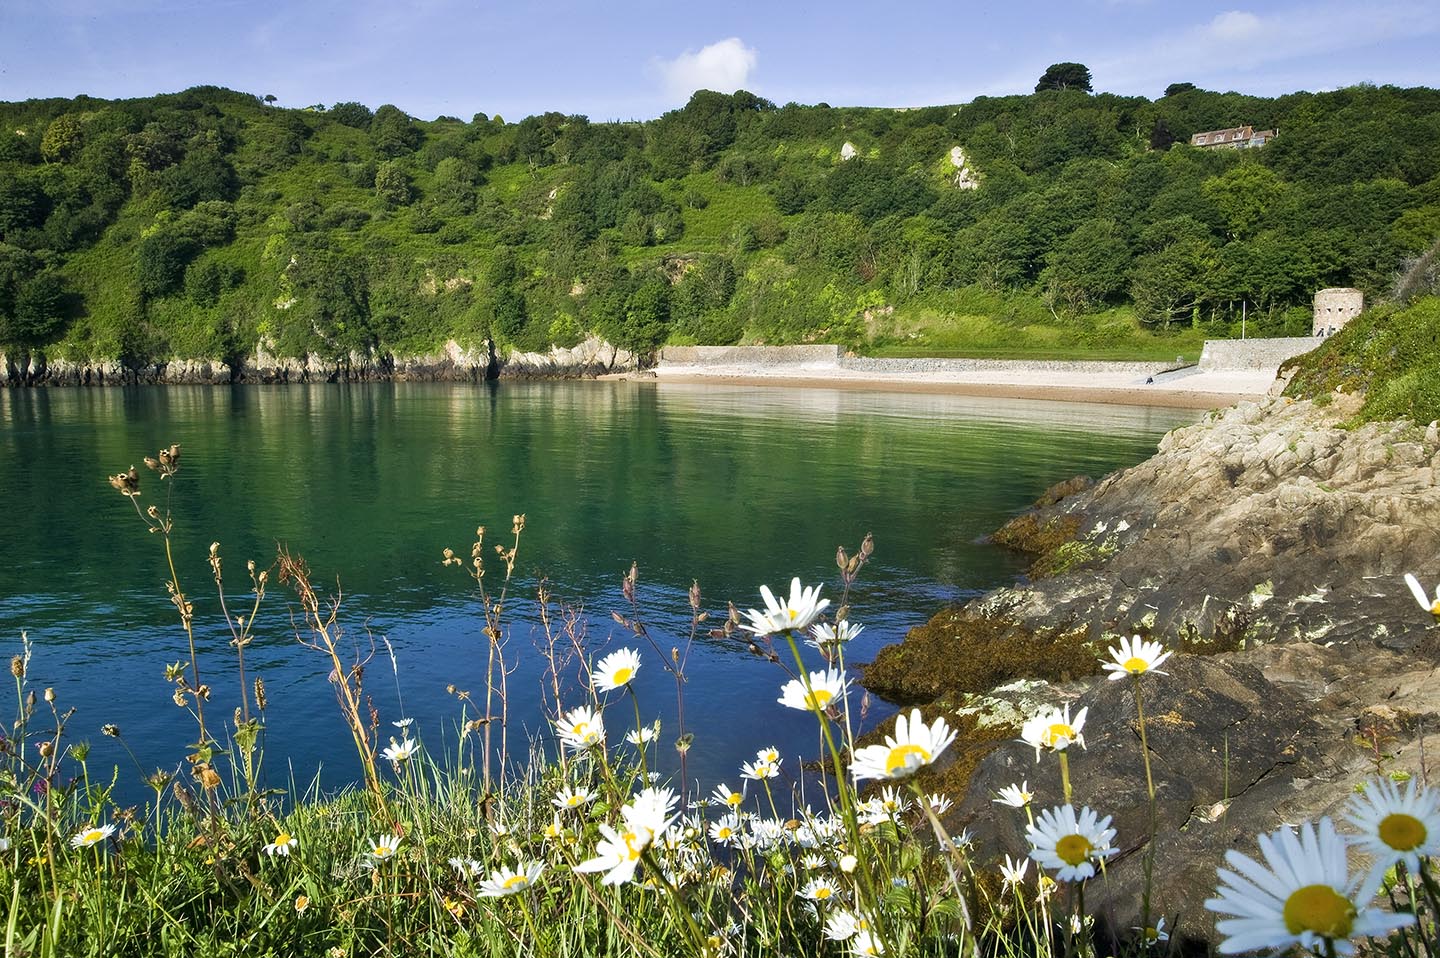 <img src="ana.jpg" alt="ana natural coastline Guernsey"/> 